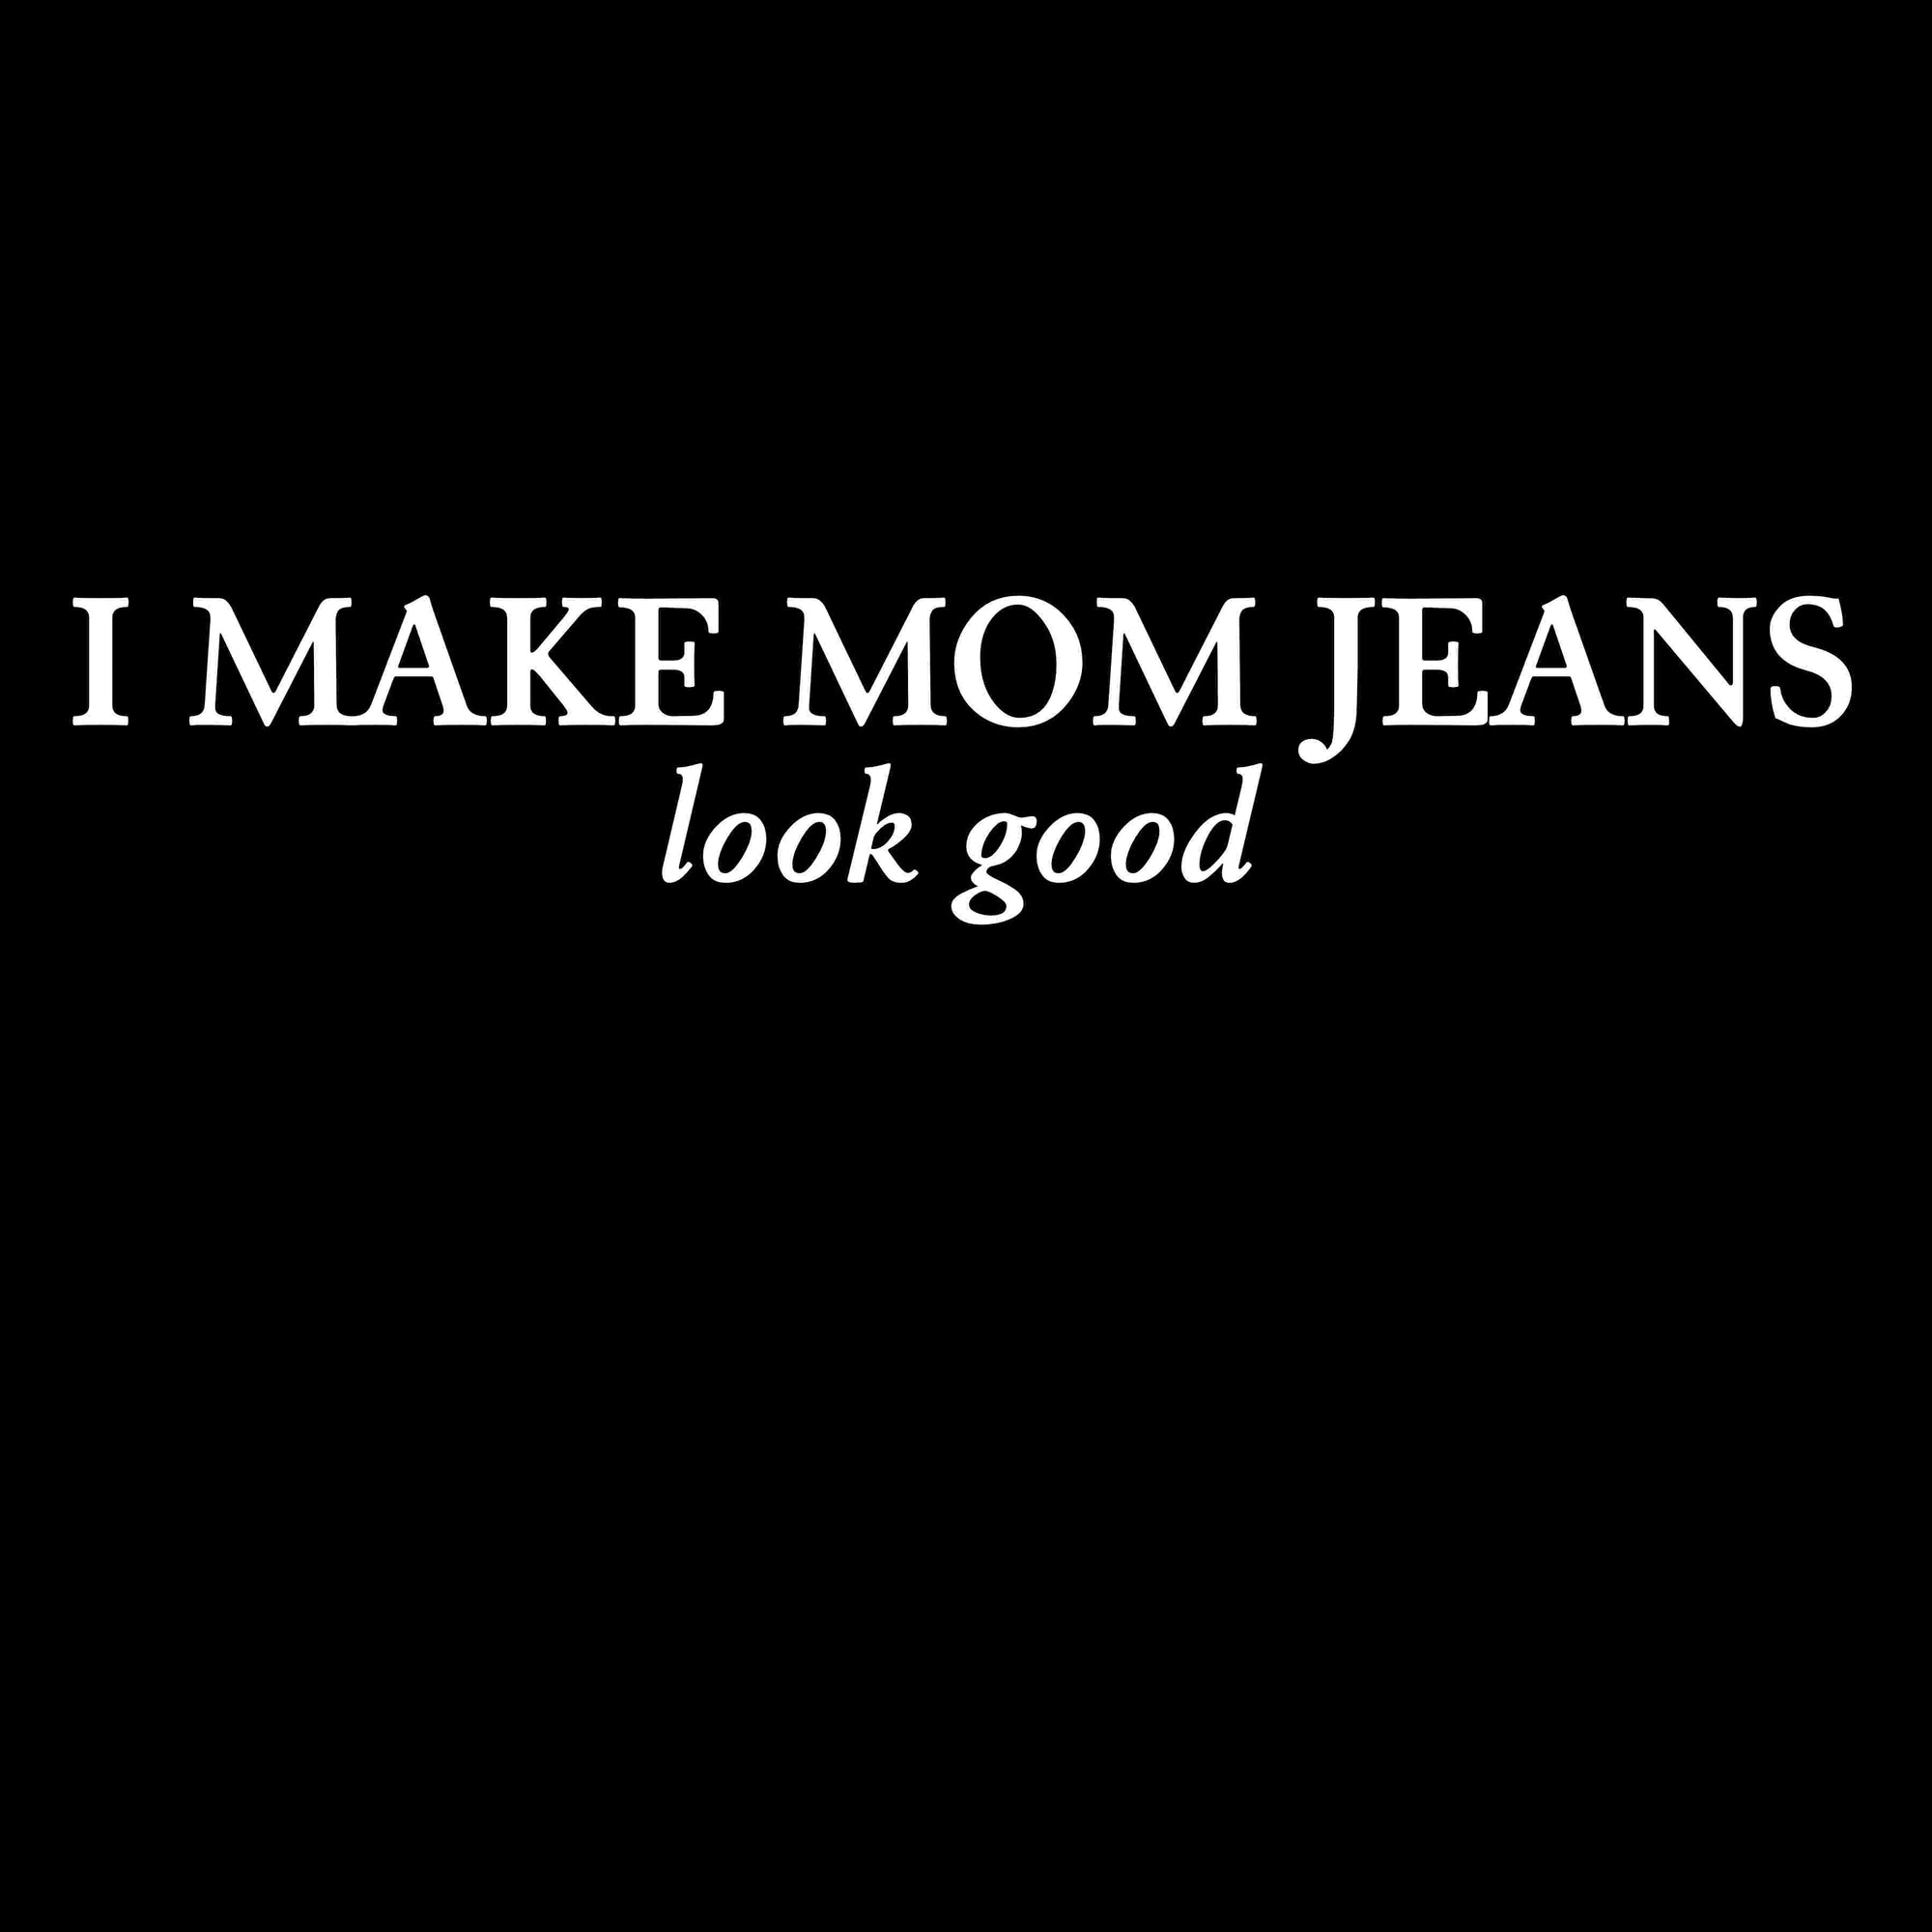 I Make Mom Jeans Look Good Printed T-Shirt-Sangria